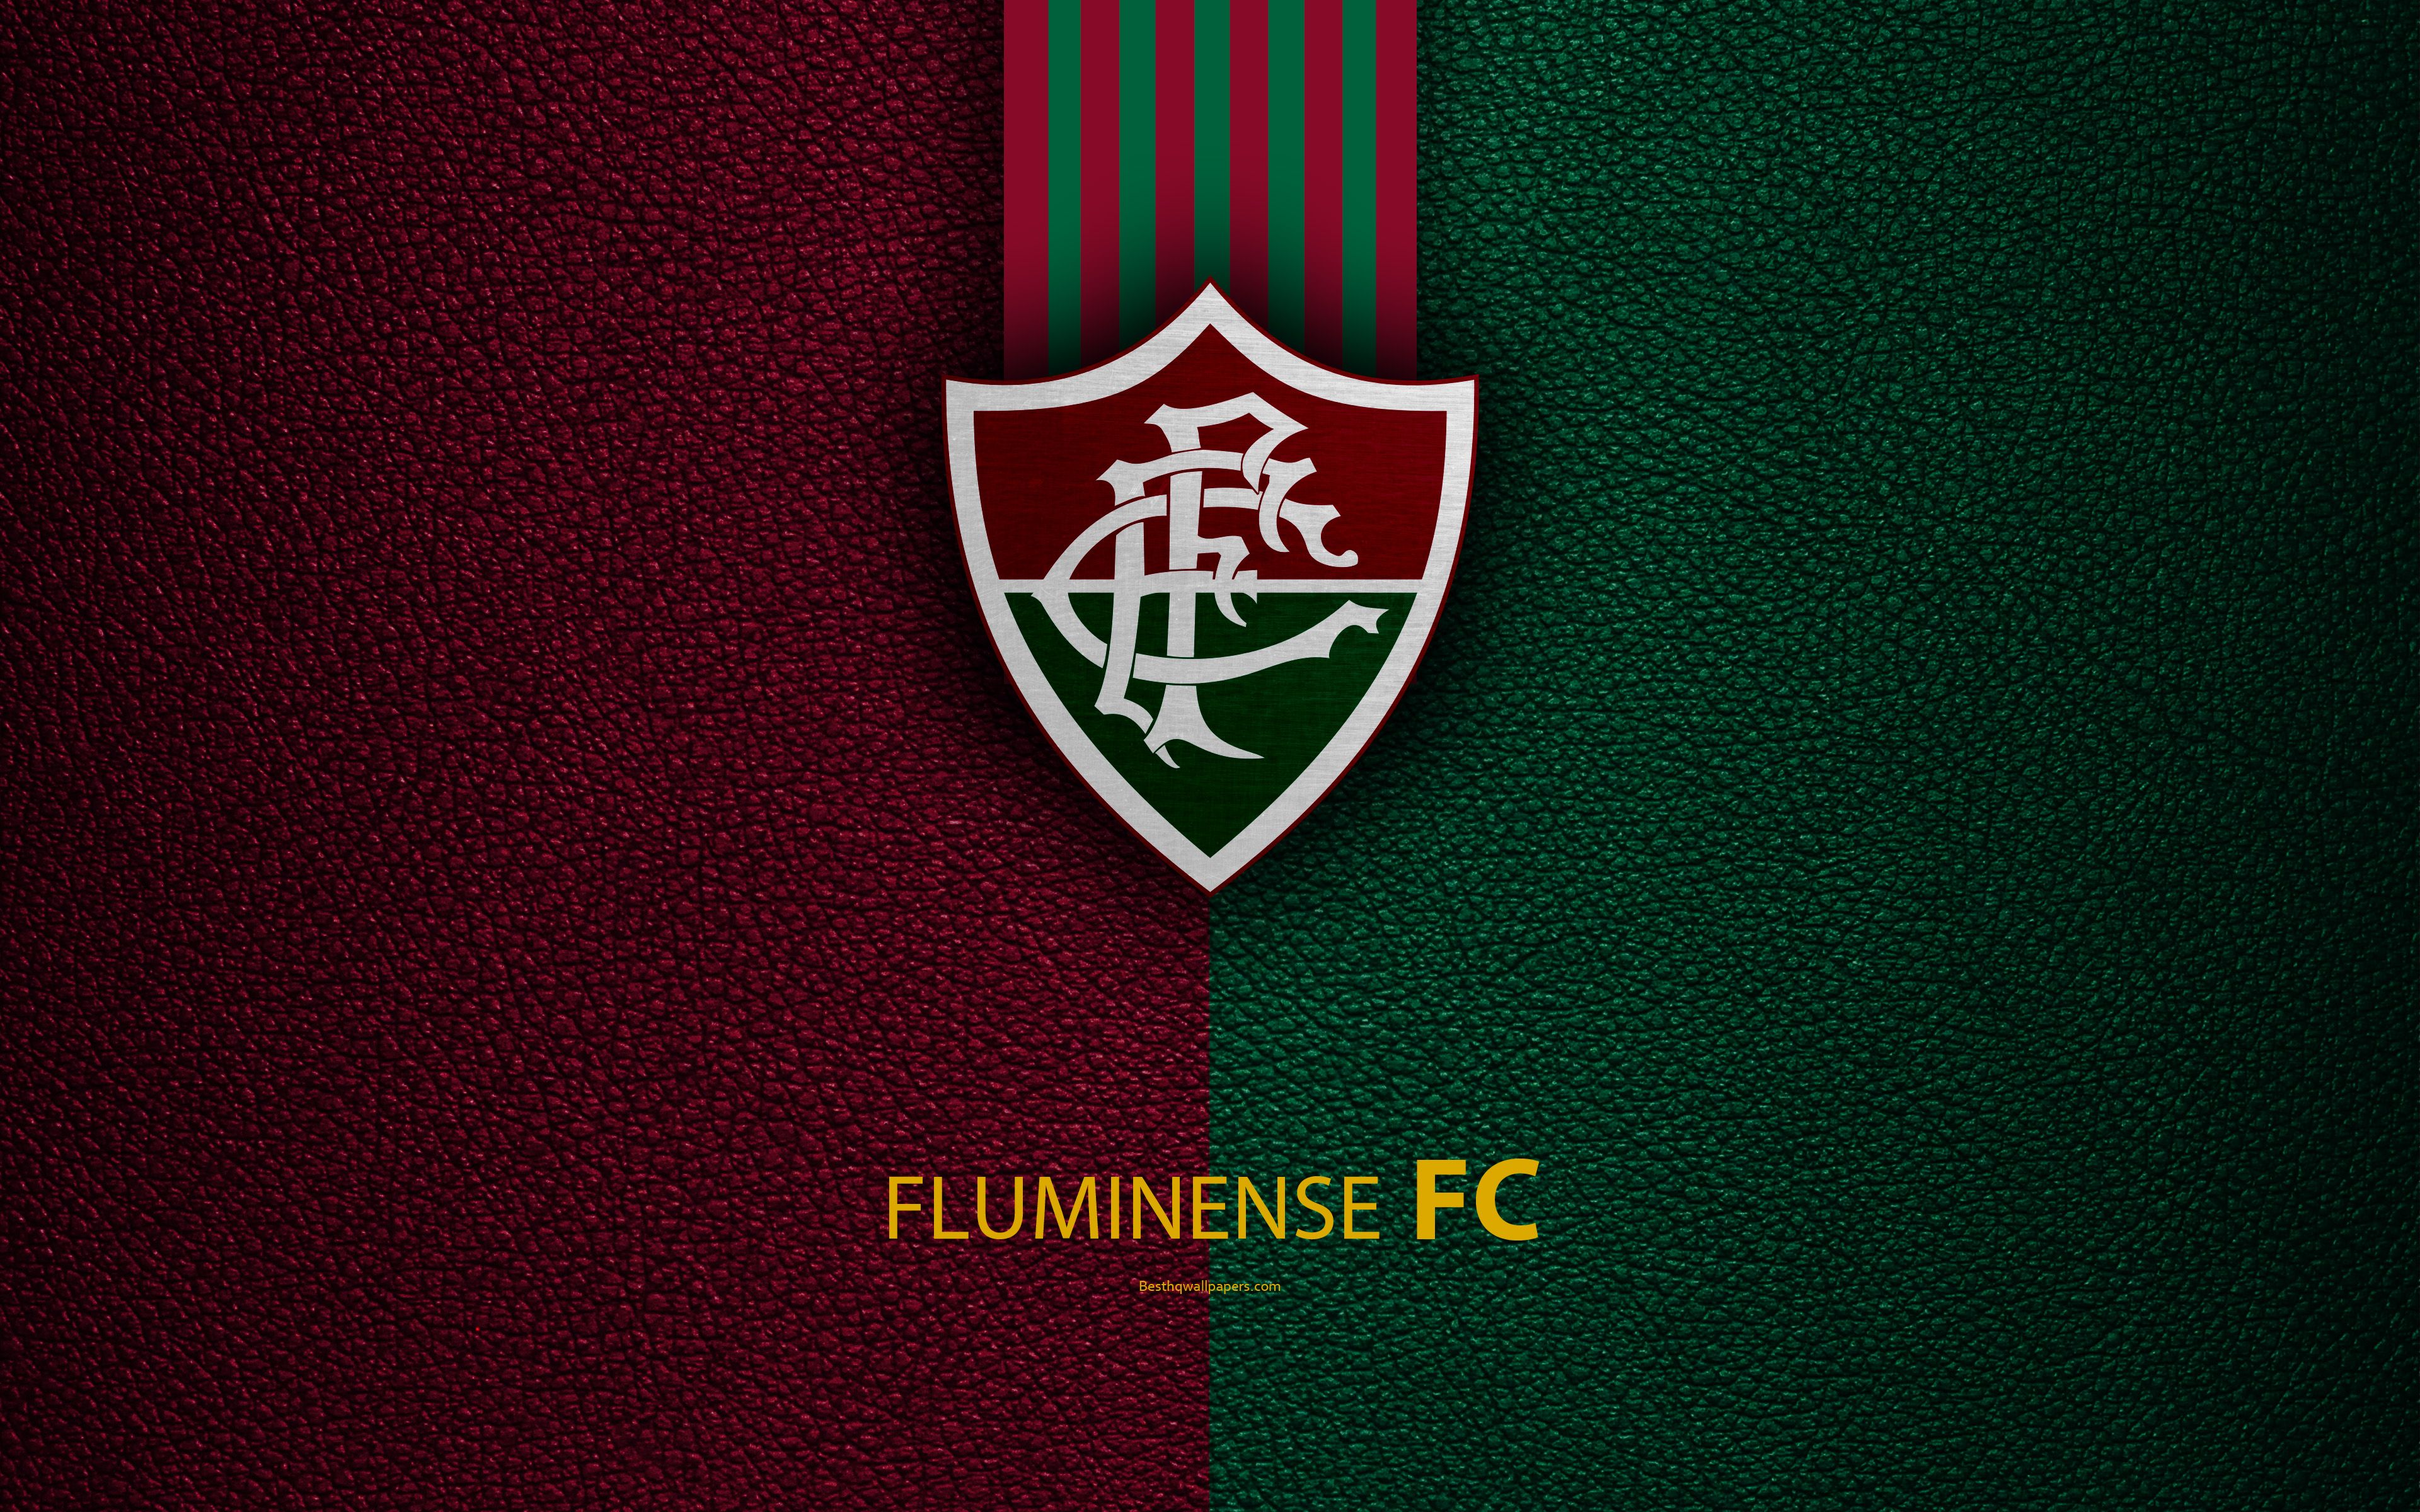 Download wallpaper Fluminense FC, 4K, Brazilian football club